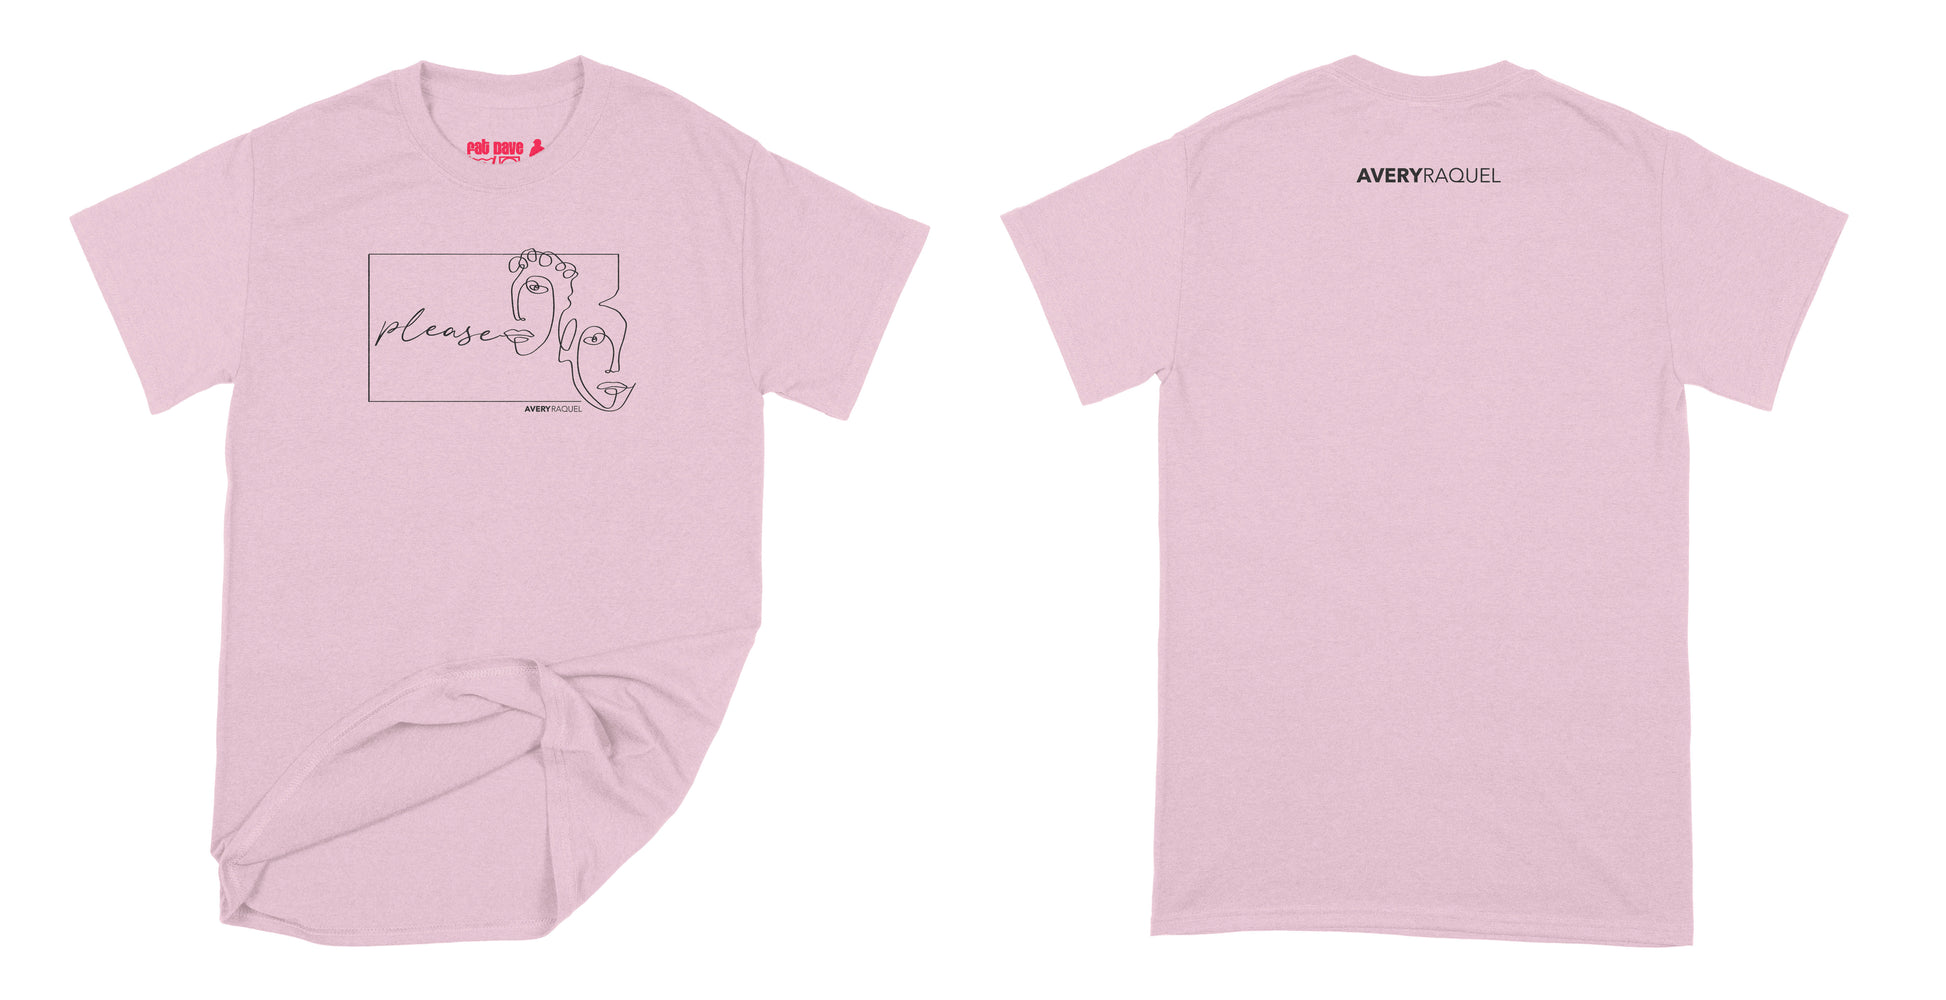 Avery Raquel Please T-Shirt Small Light Pink